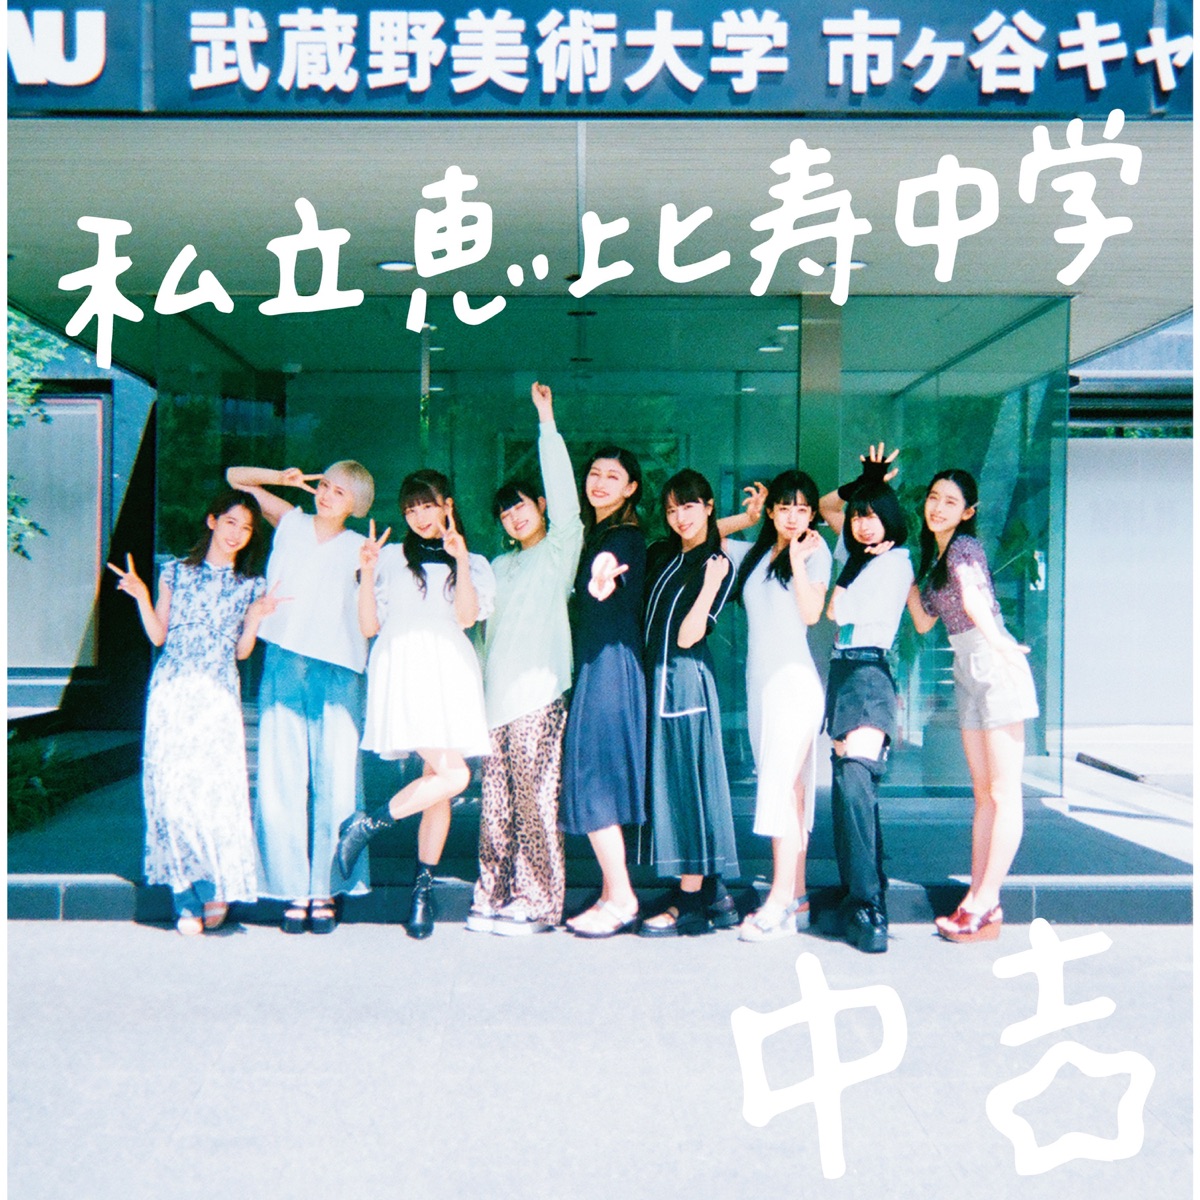 Cover art for『Shiritsu Ebisu Chuugaku - エビ中出席番号の歌 その3』from the release『Major Debut 10th Anniversary Album CHU-KICHI